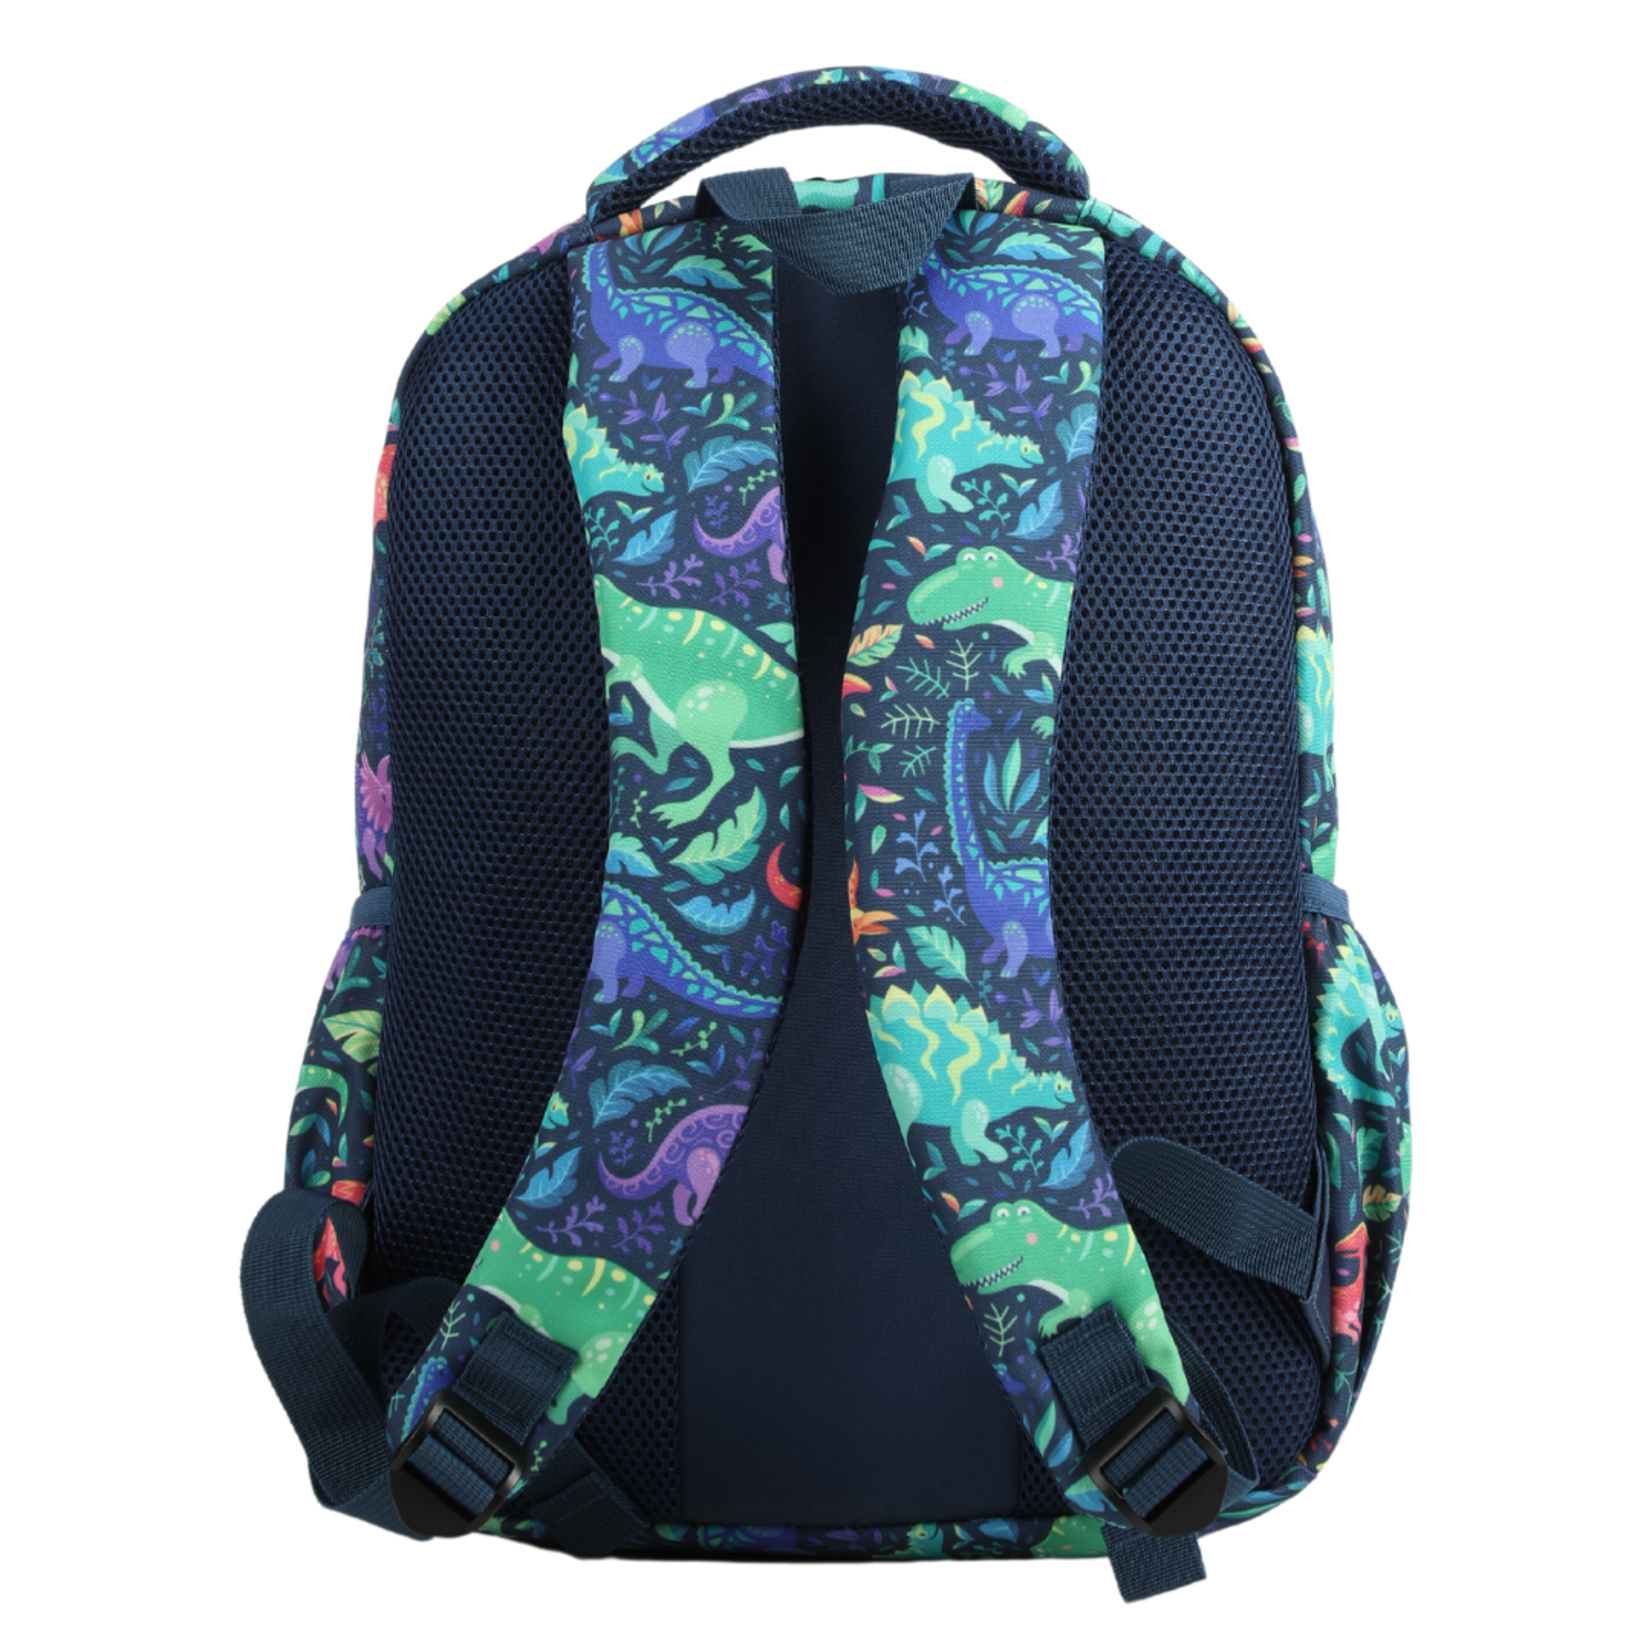 Alimasy Dinosaurs Midsize Backpack